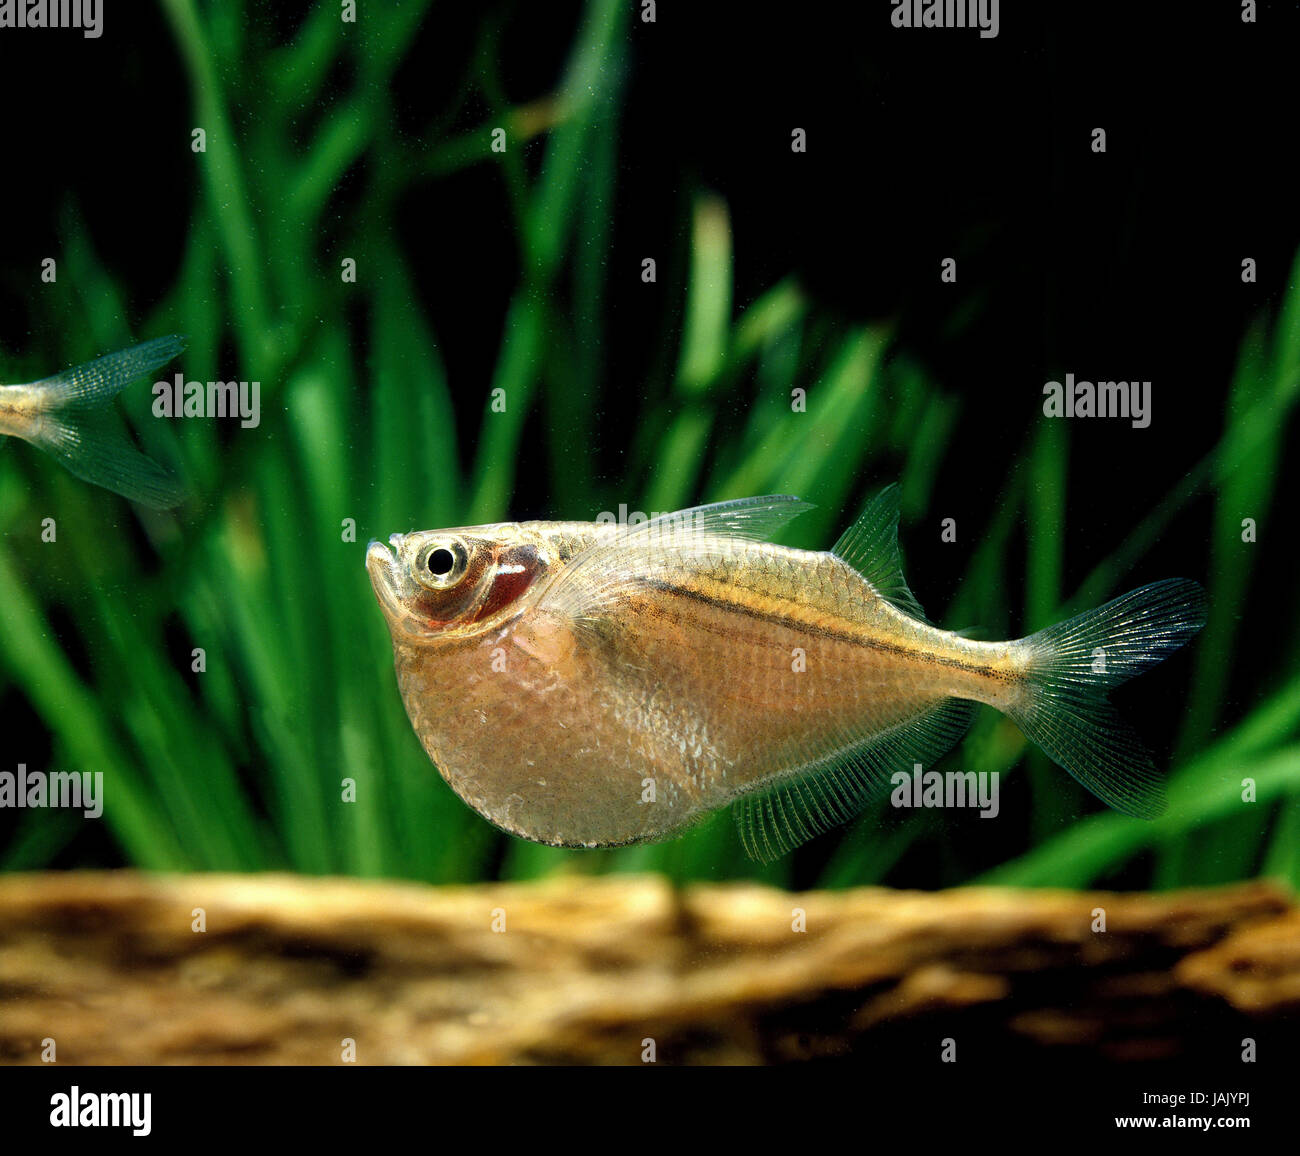 Silver hatchet abdomen fish,Gasteropelecus sternicla, Stock Photo